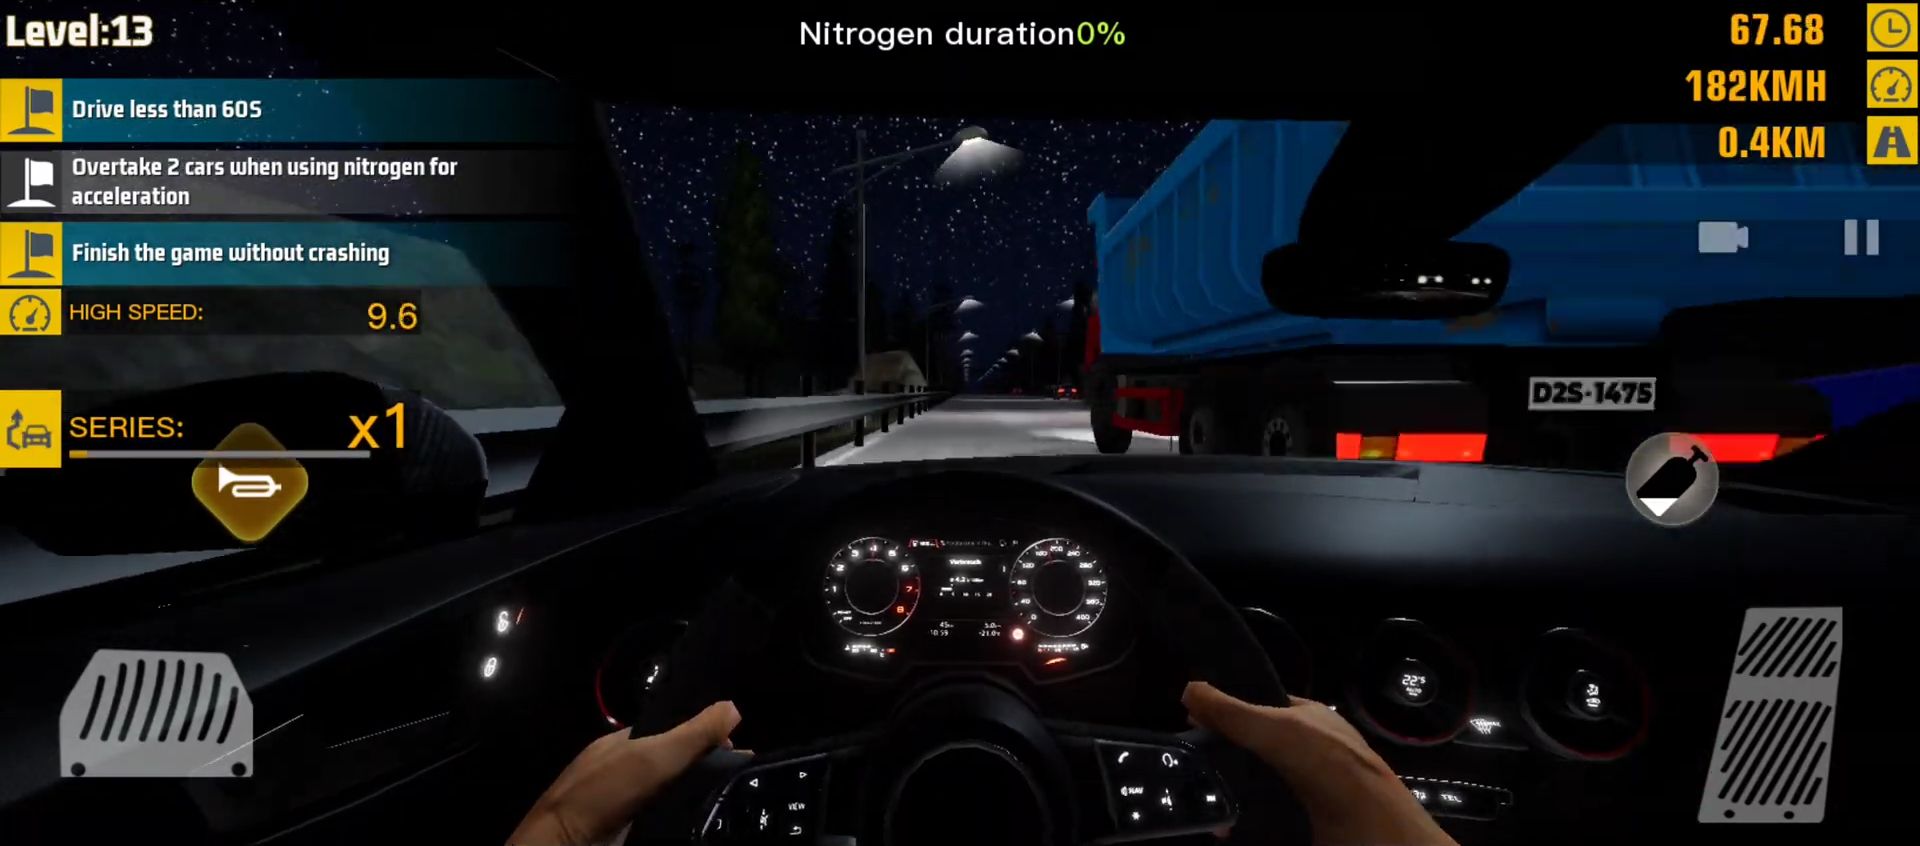 Real Driving 2:Ultimate Car Simulator - Android game screenshots.